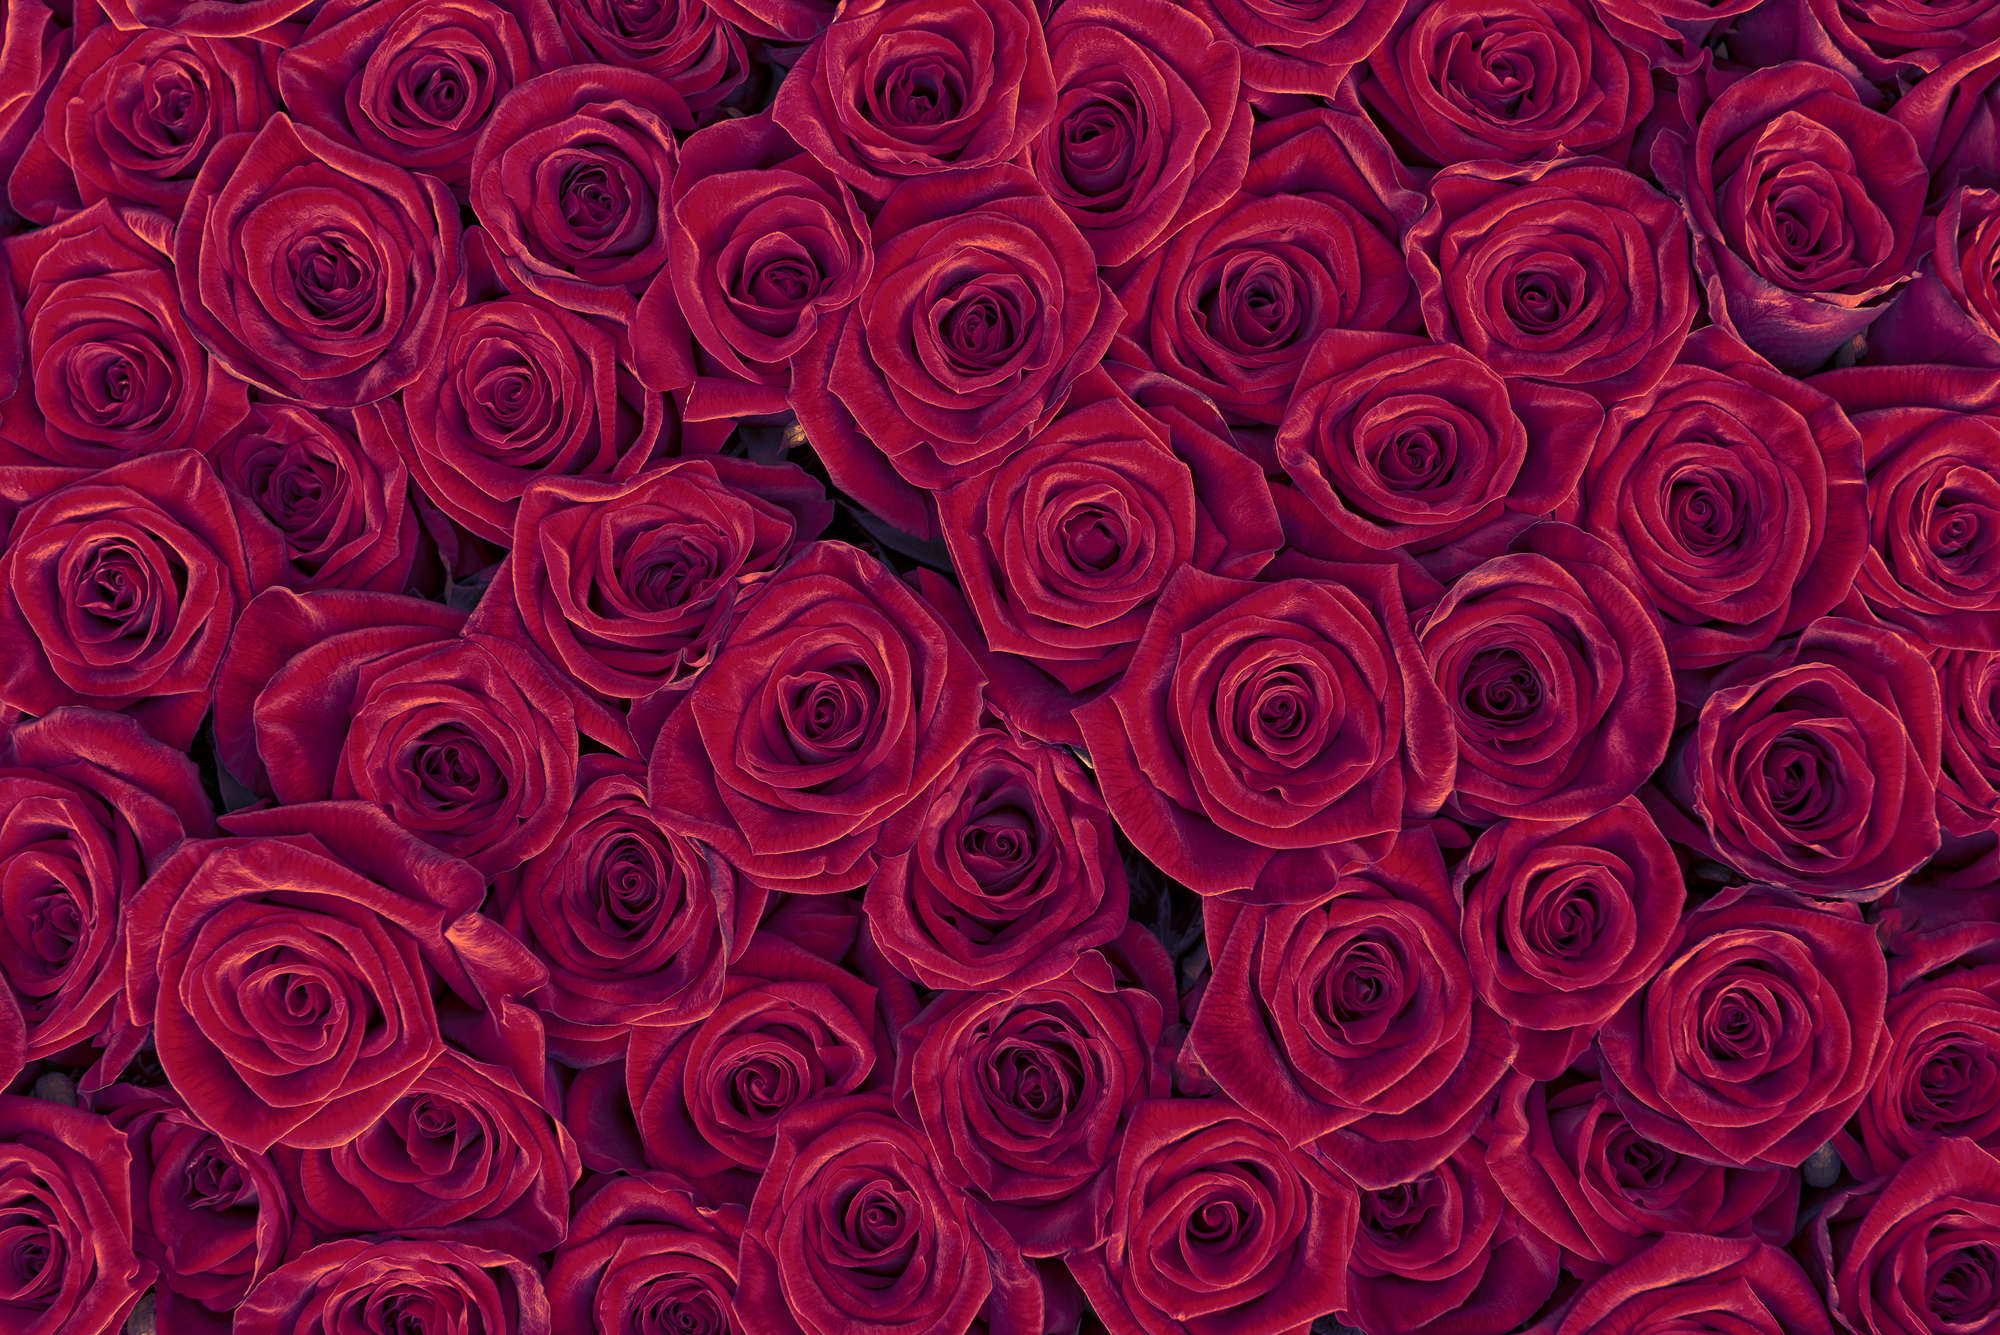             Pflanzen Fototapete rote Rosen auf Matt Glattvlies
        